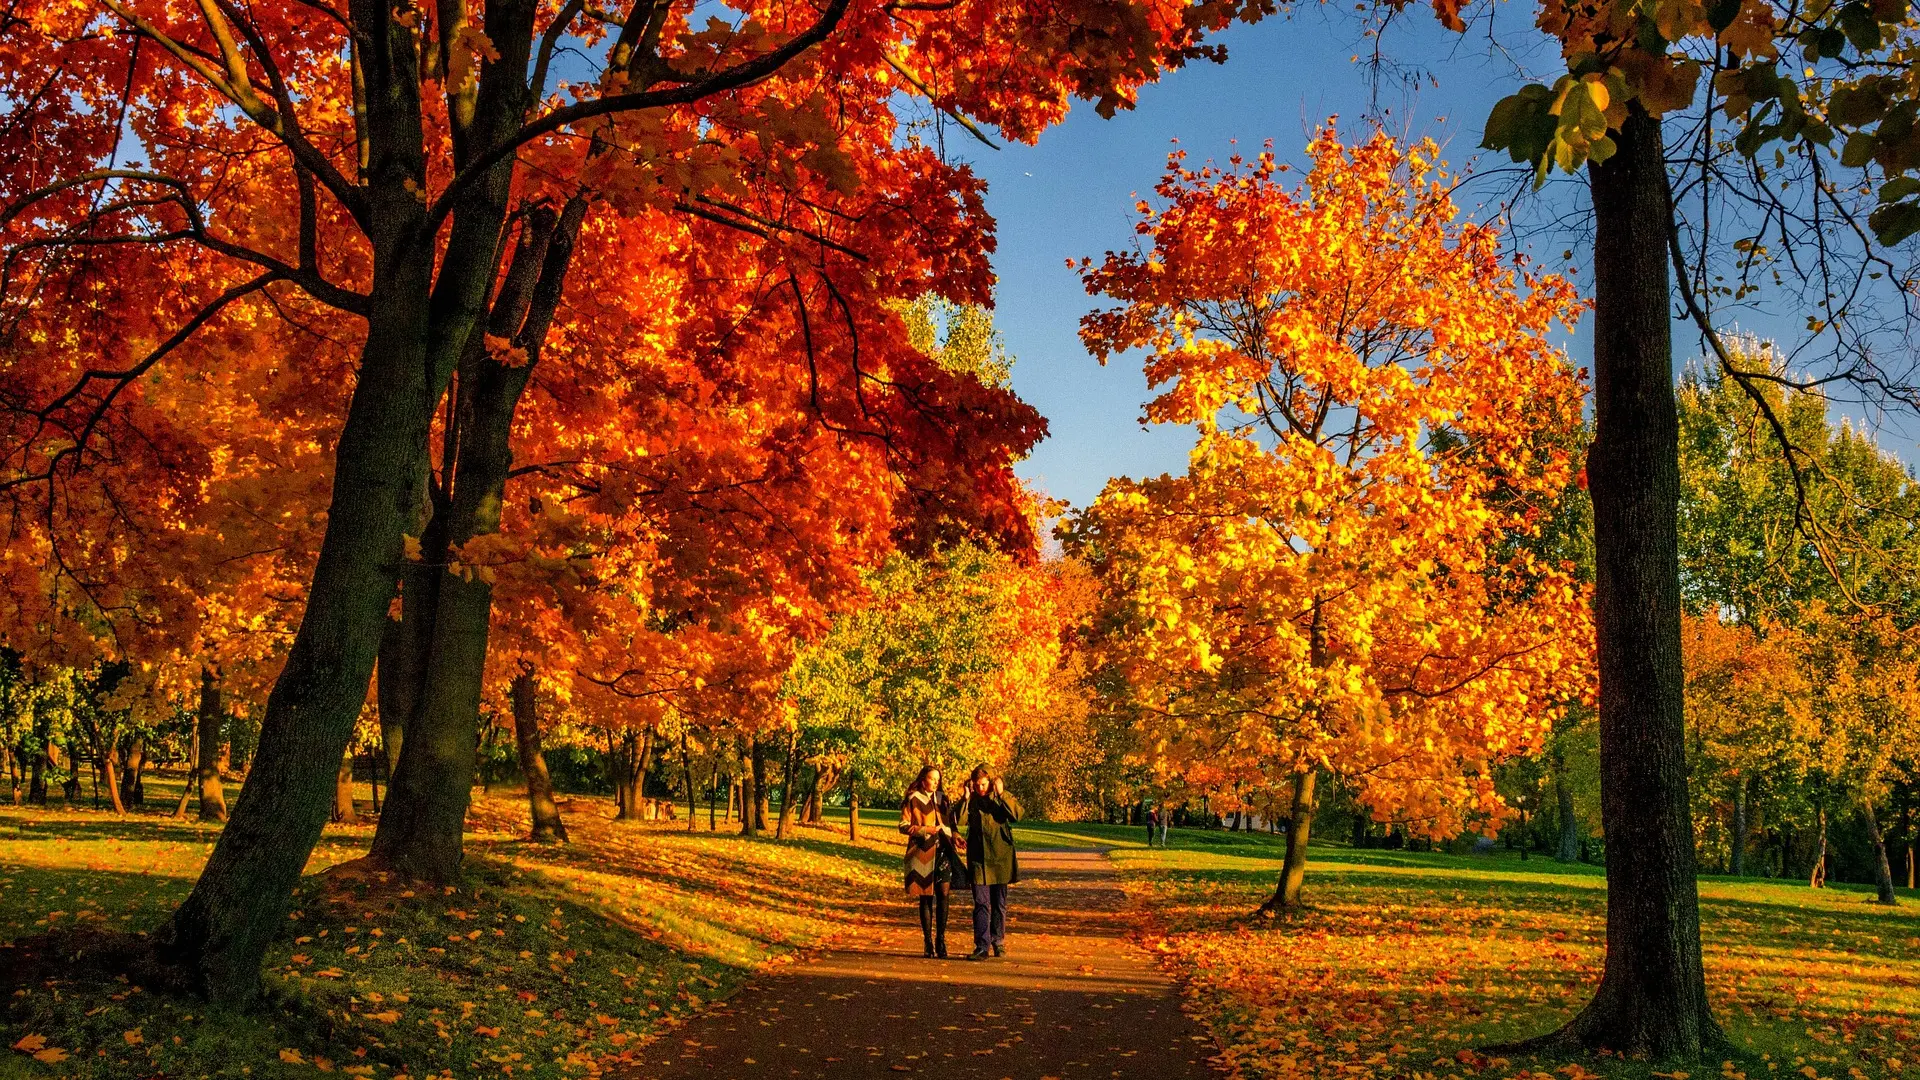 fall jesen septembar, vreme, lišće foto pixabay-6530d80b49df7.webp